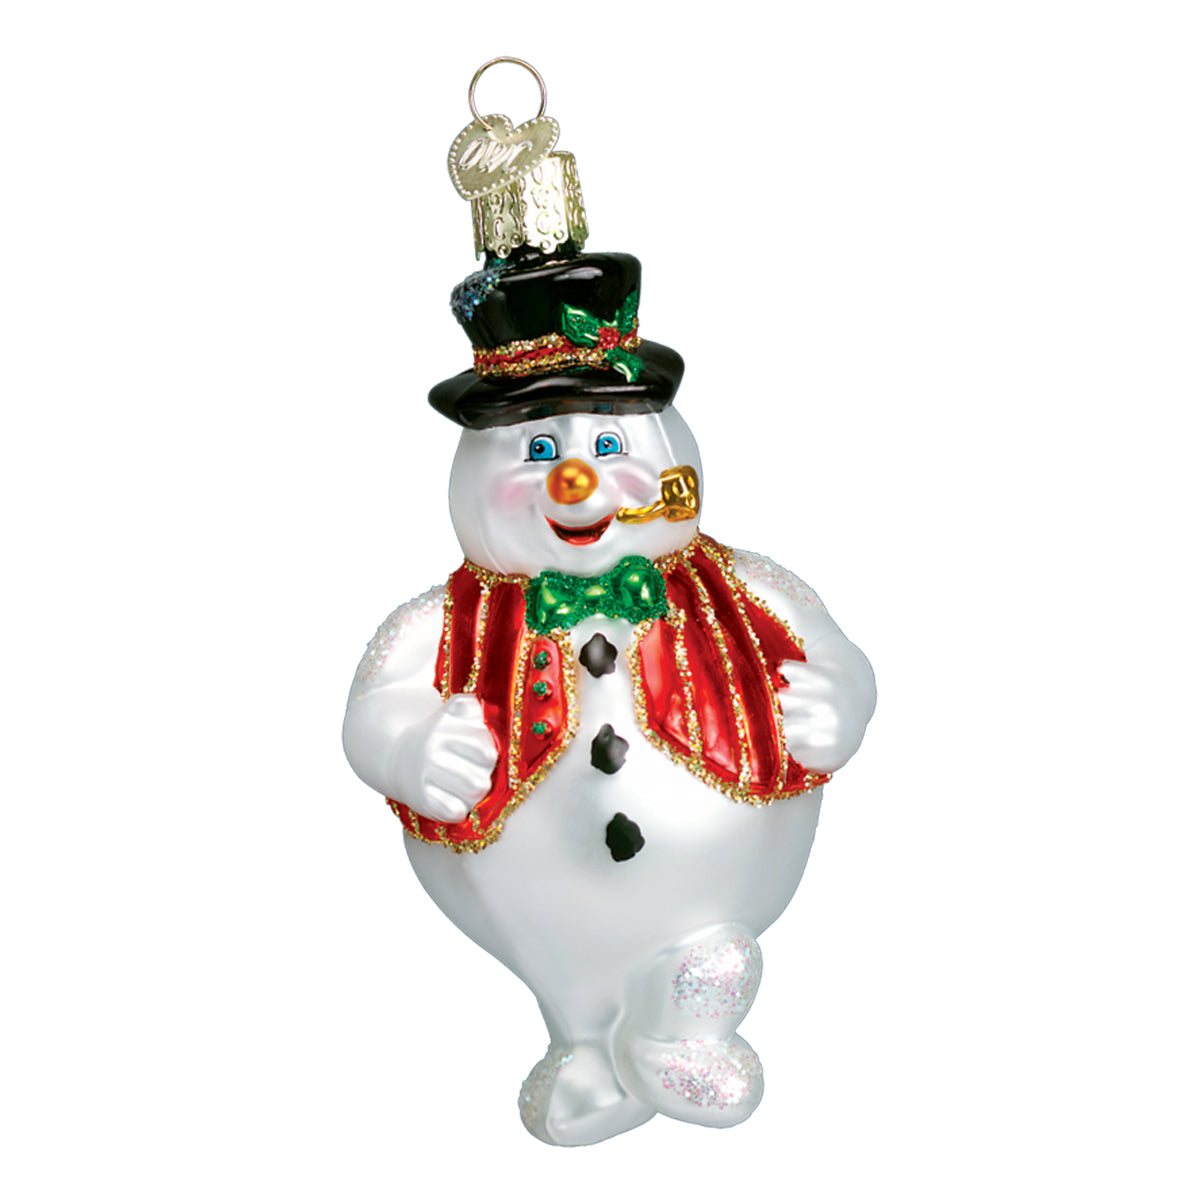 Mr. Frosty Ornament